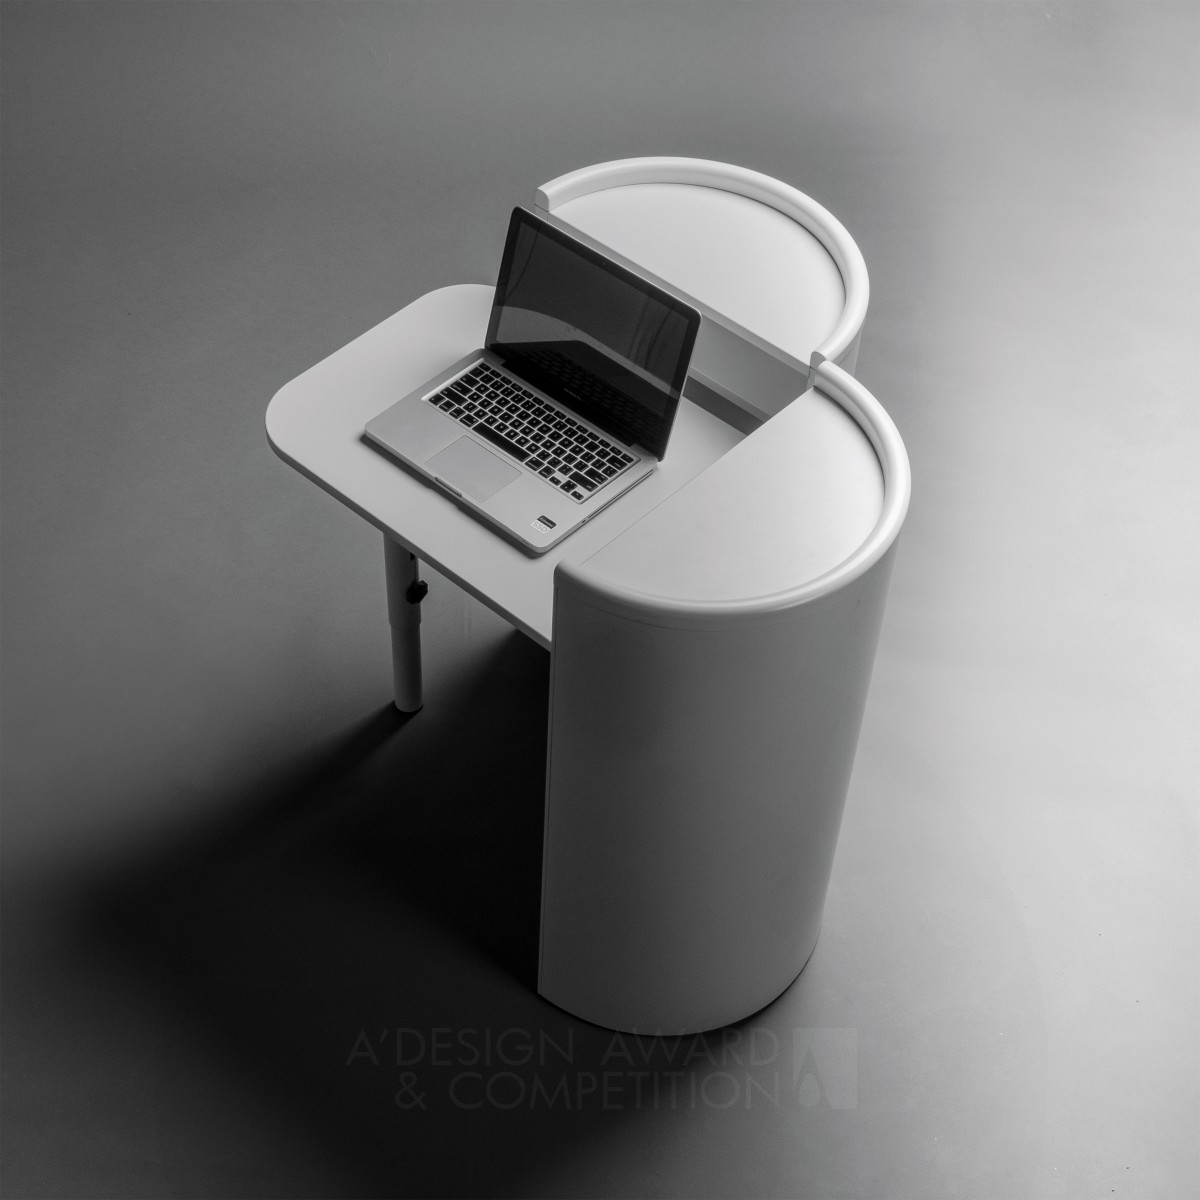 Cilindro Desk by Miguel Arruda Silver Furniture Design Award Winner 2020 